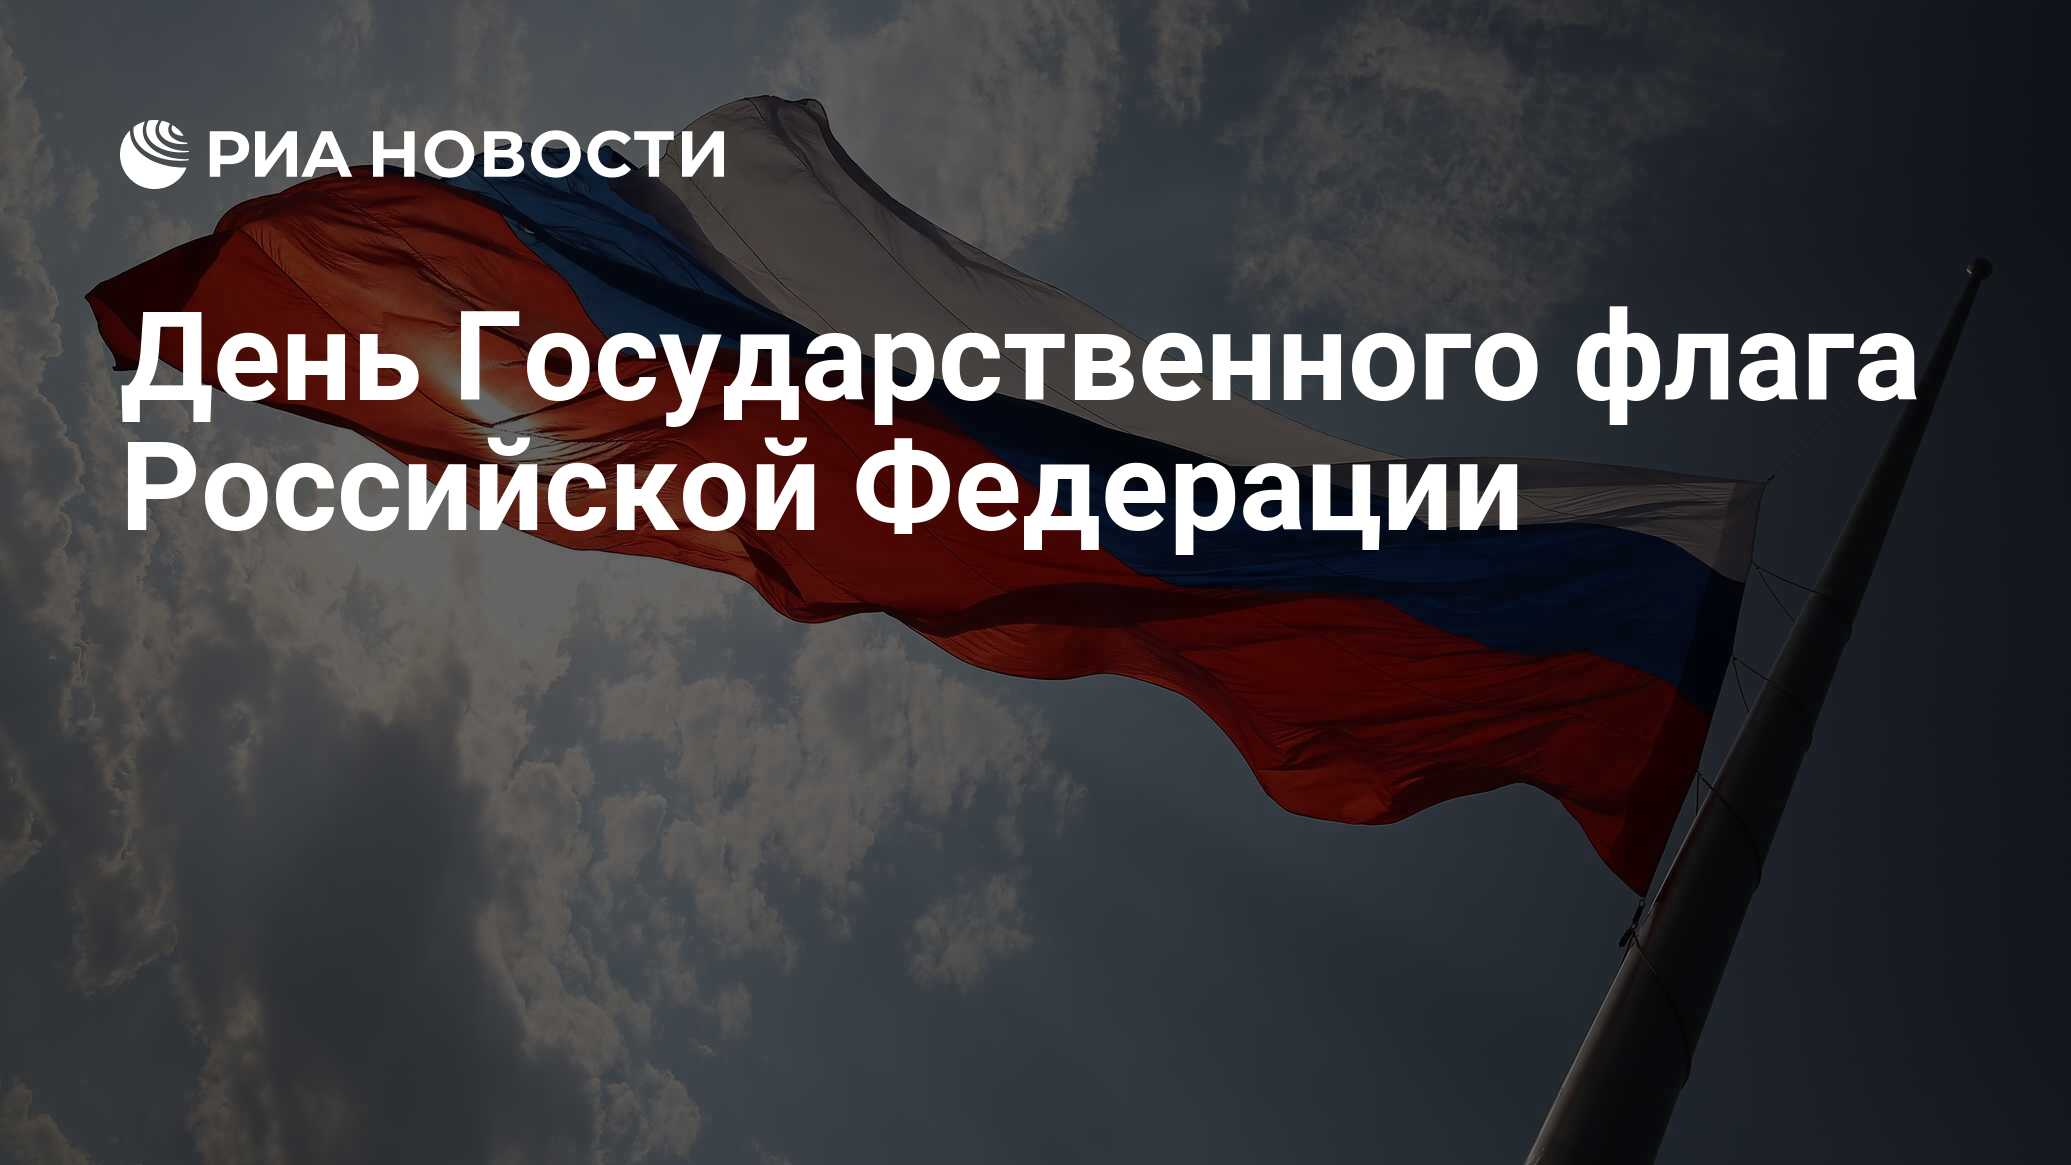 Den Gosudarstvennogo Flaga Rossijskoj Federacii Ria Novosti 24 08 2019 [ 1166 x 2072 Pixel ]